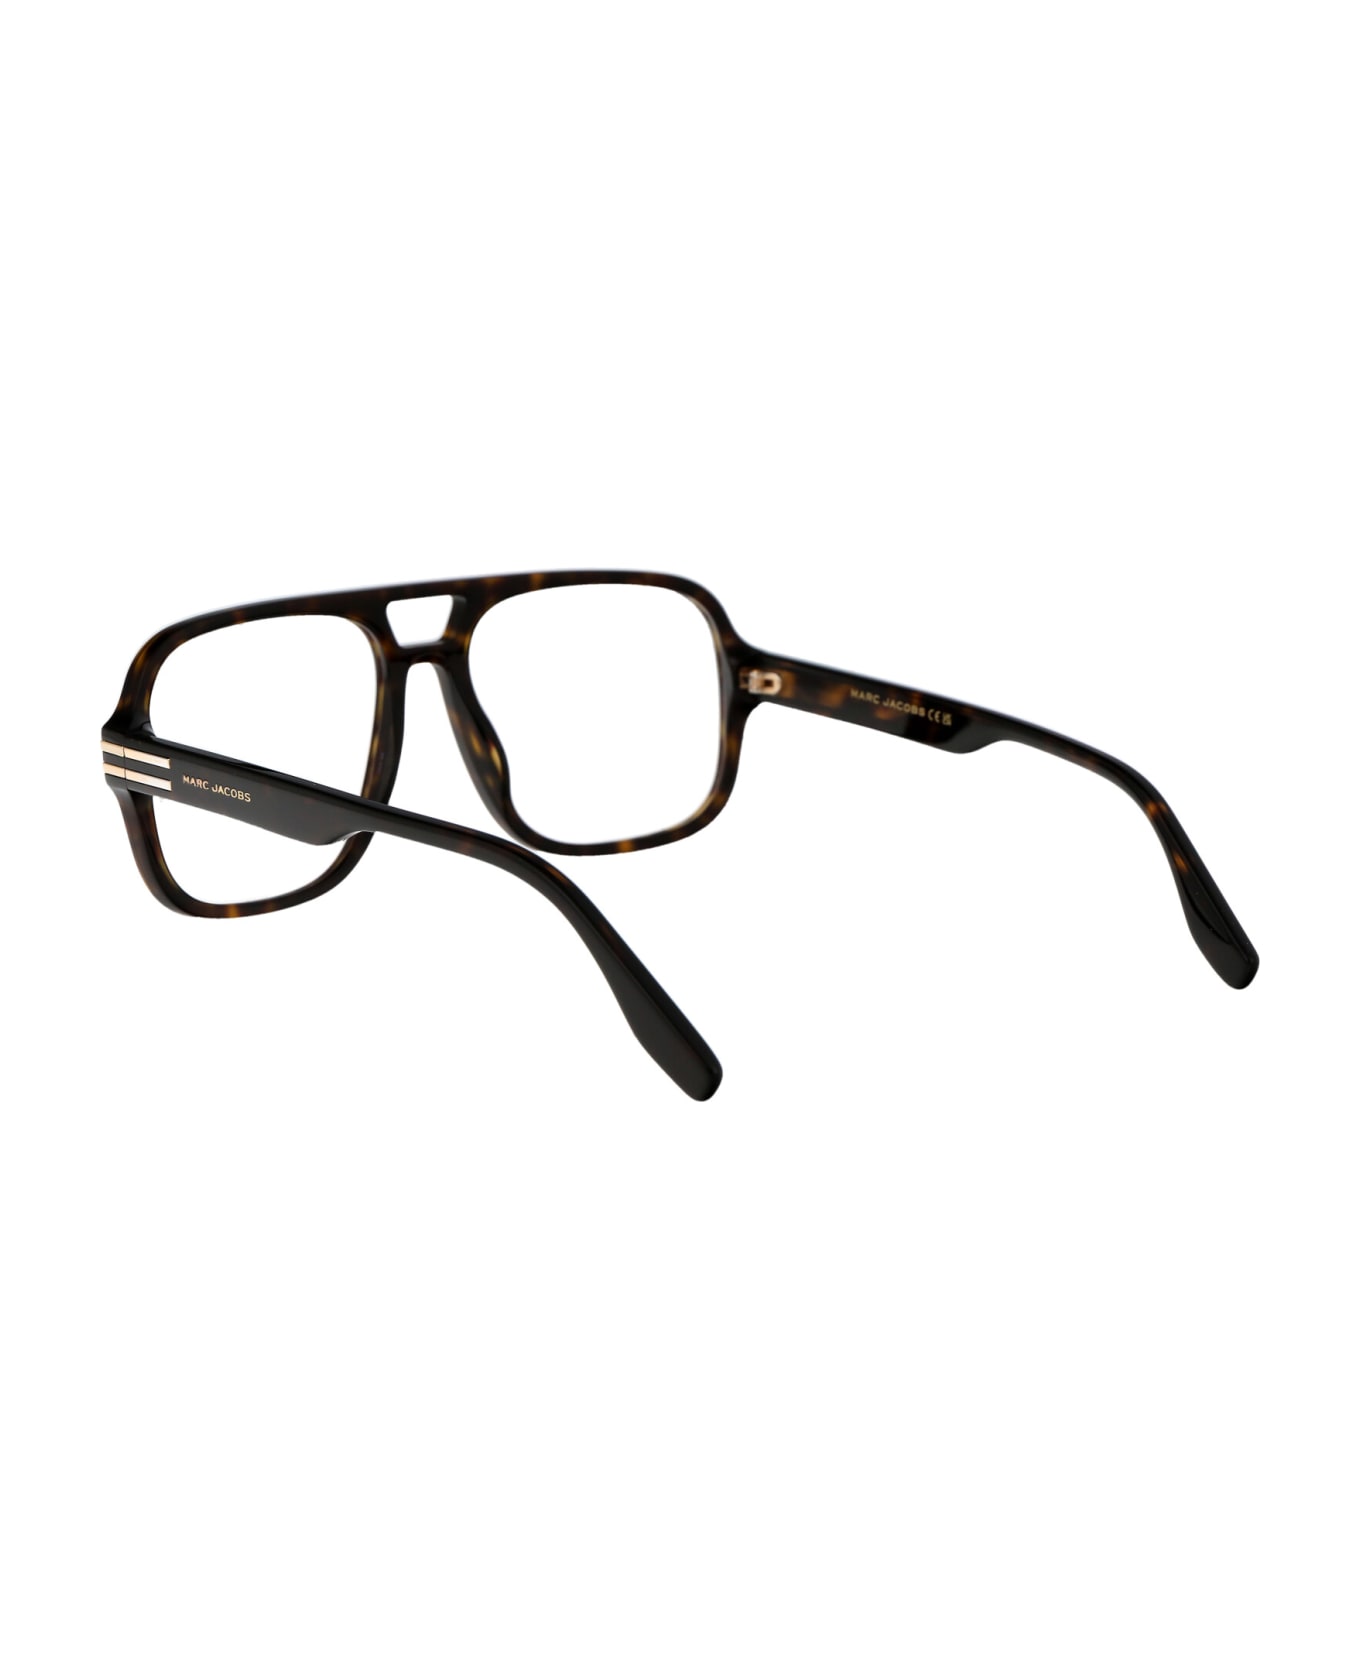 Marc Jacobs Eyewear Marc 755 Glasses - 086 HVN アイウェア